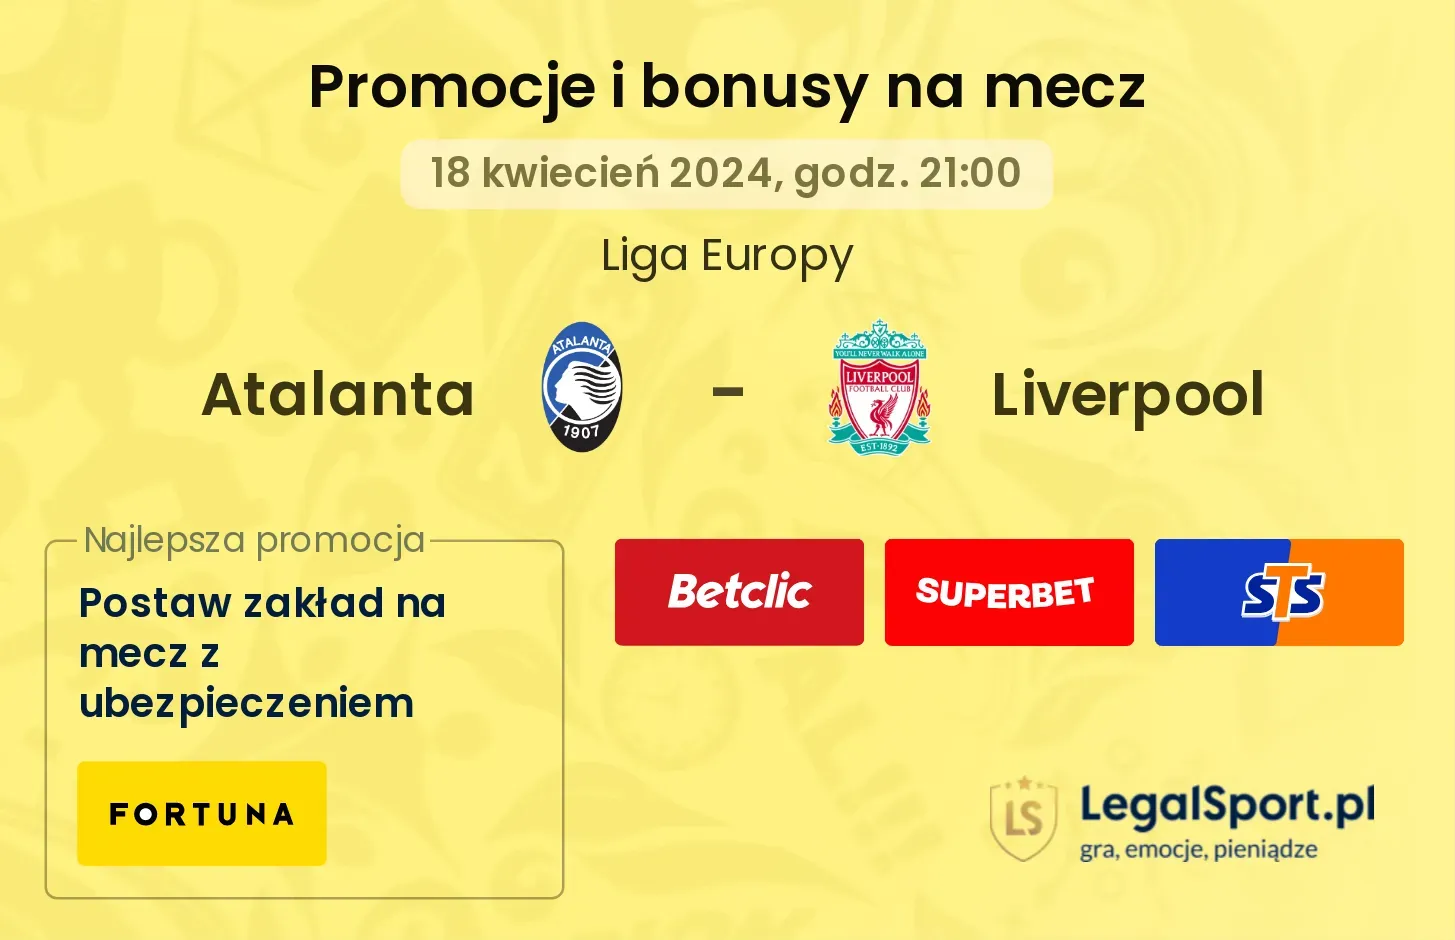 Atalanta - Liverpool promocje bonusy na mecz